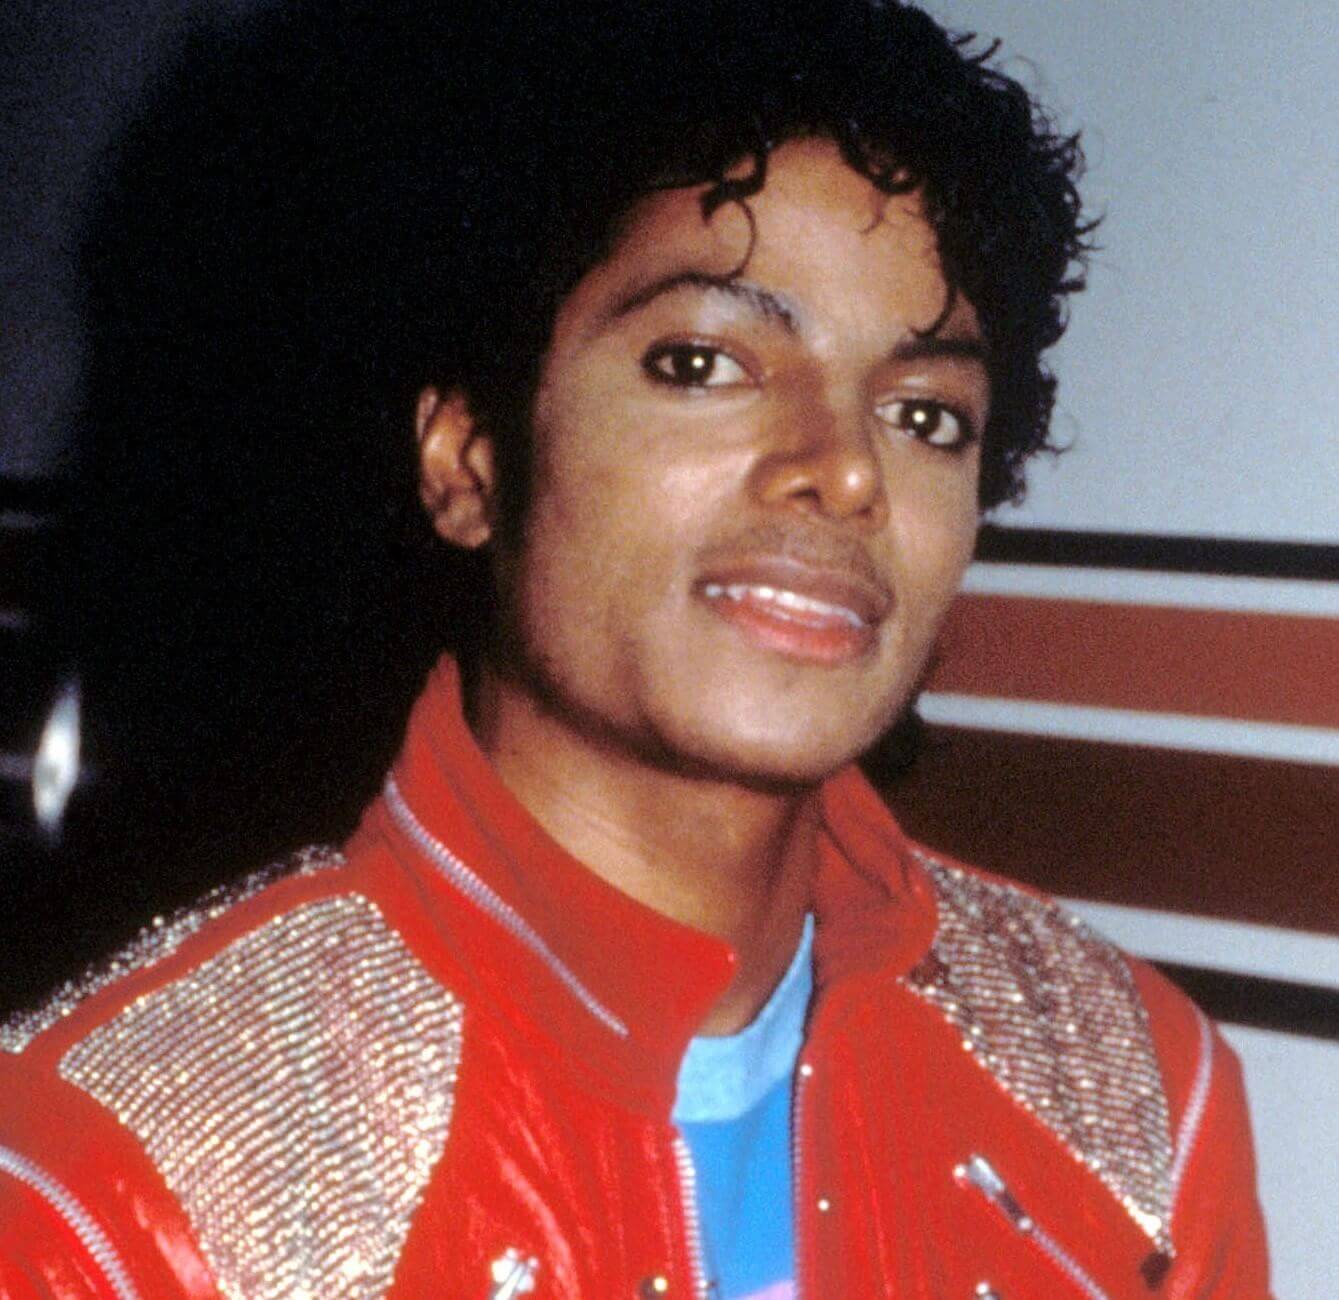 "Billie Jean" singer Michael Jackson wearing red